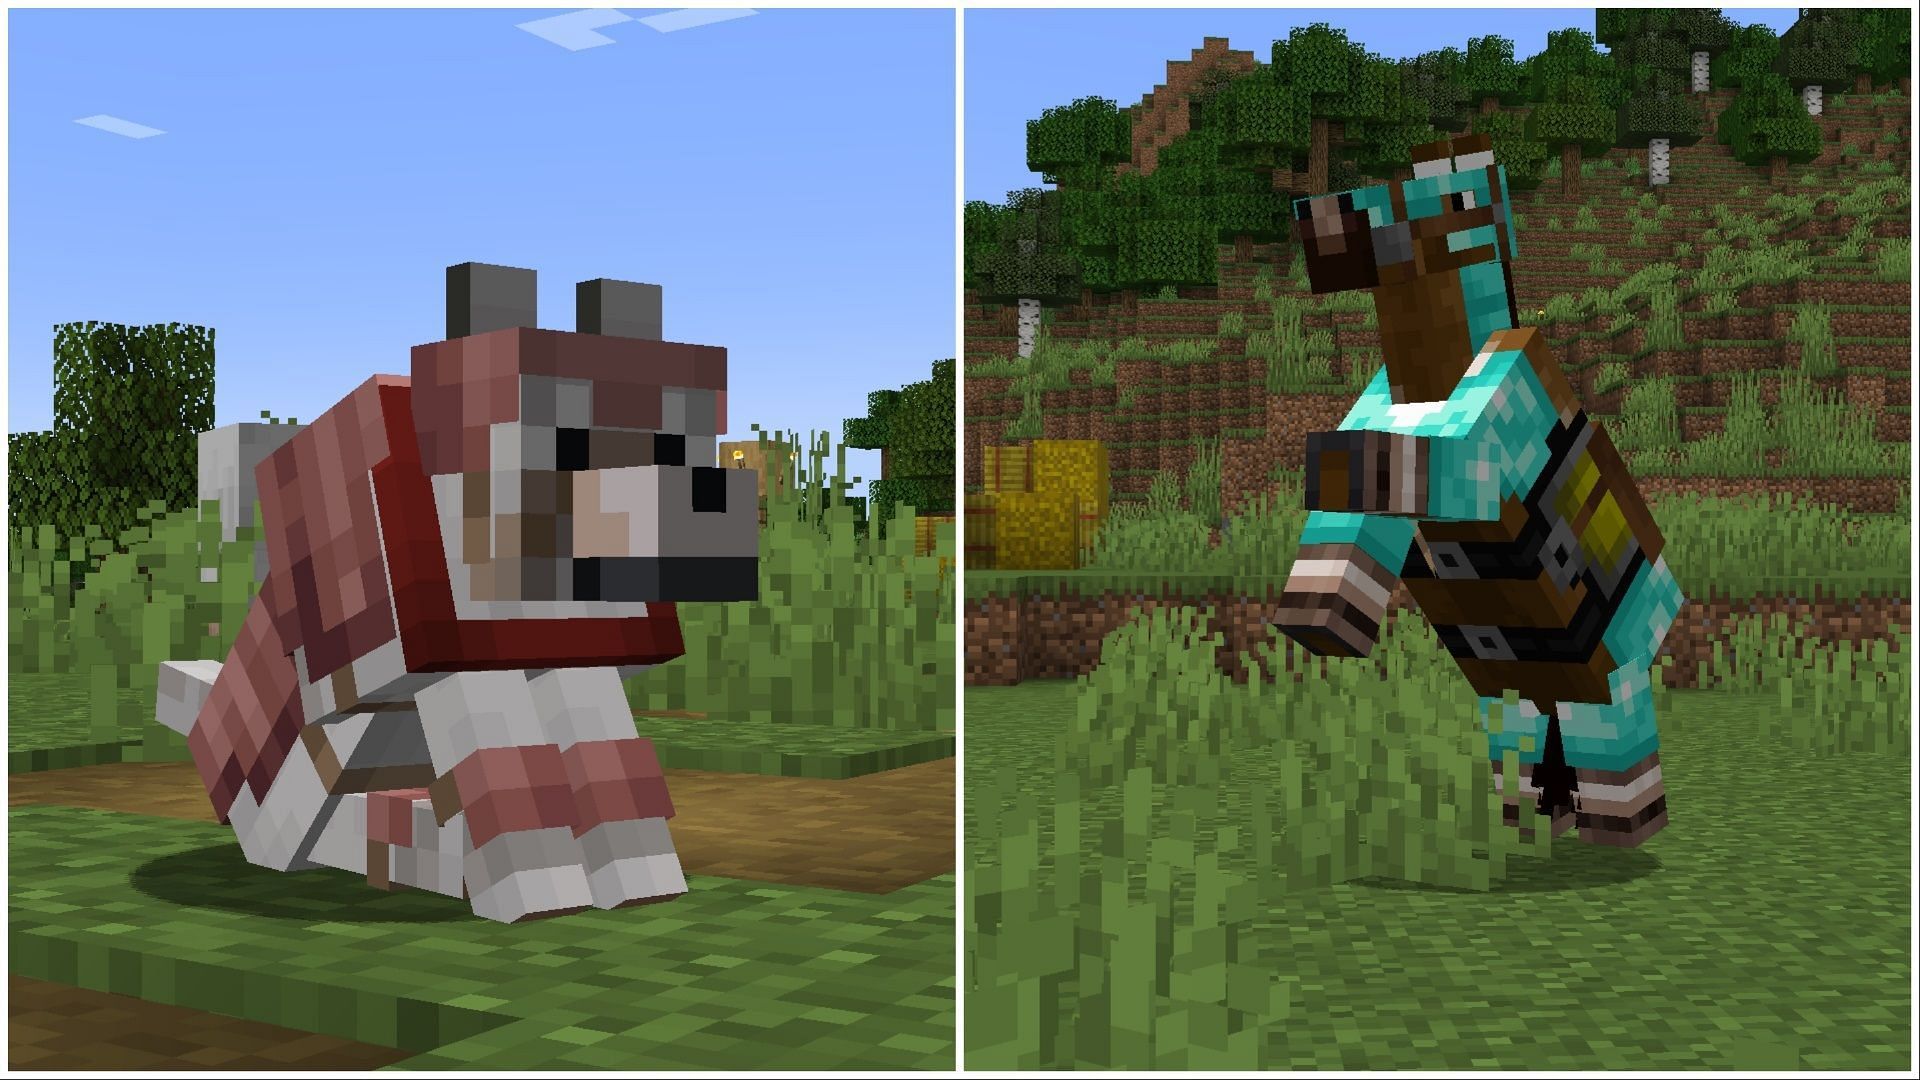 Wolf armor vs horse armor (Image via Mojang)